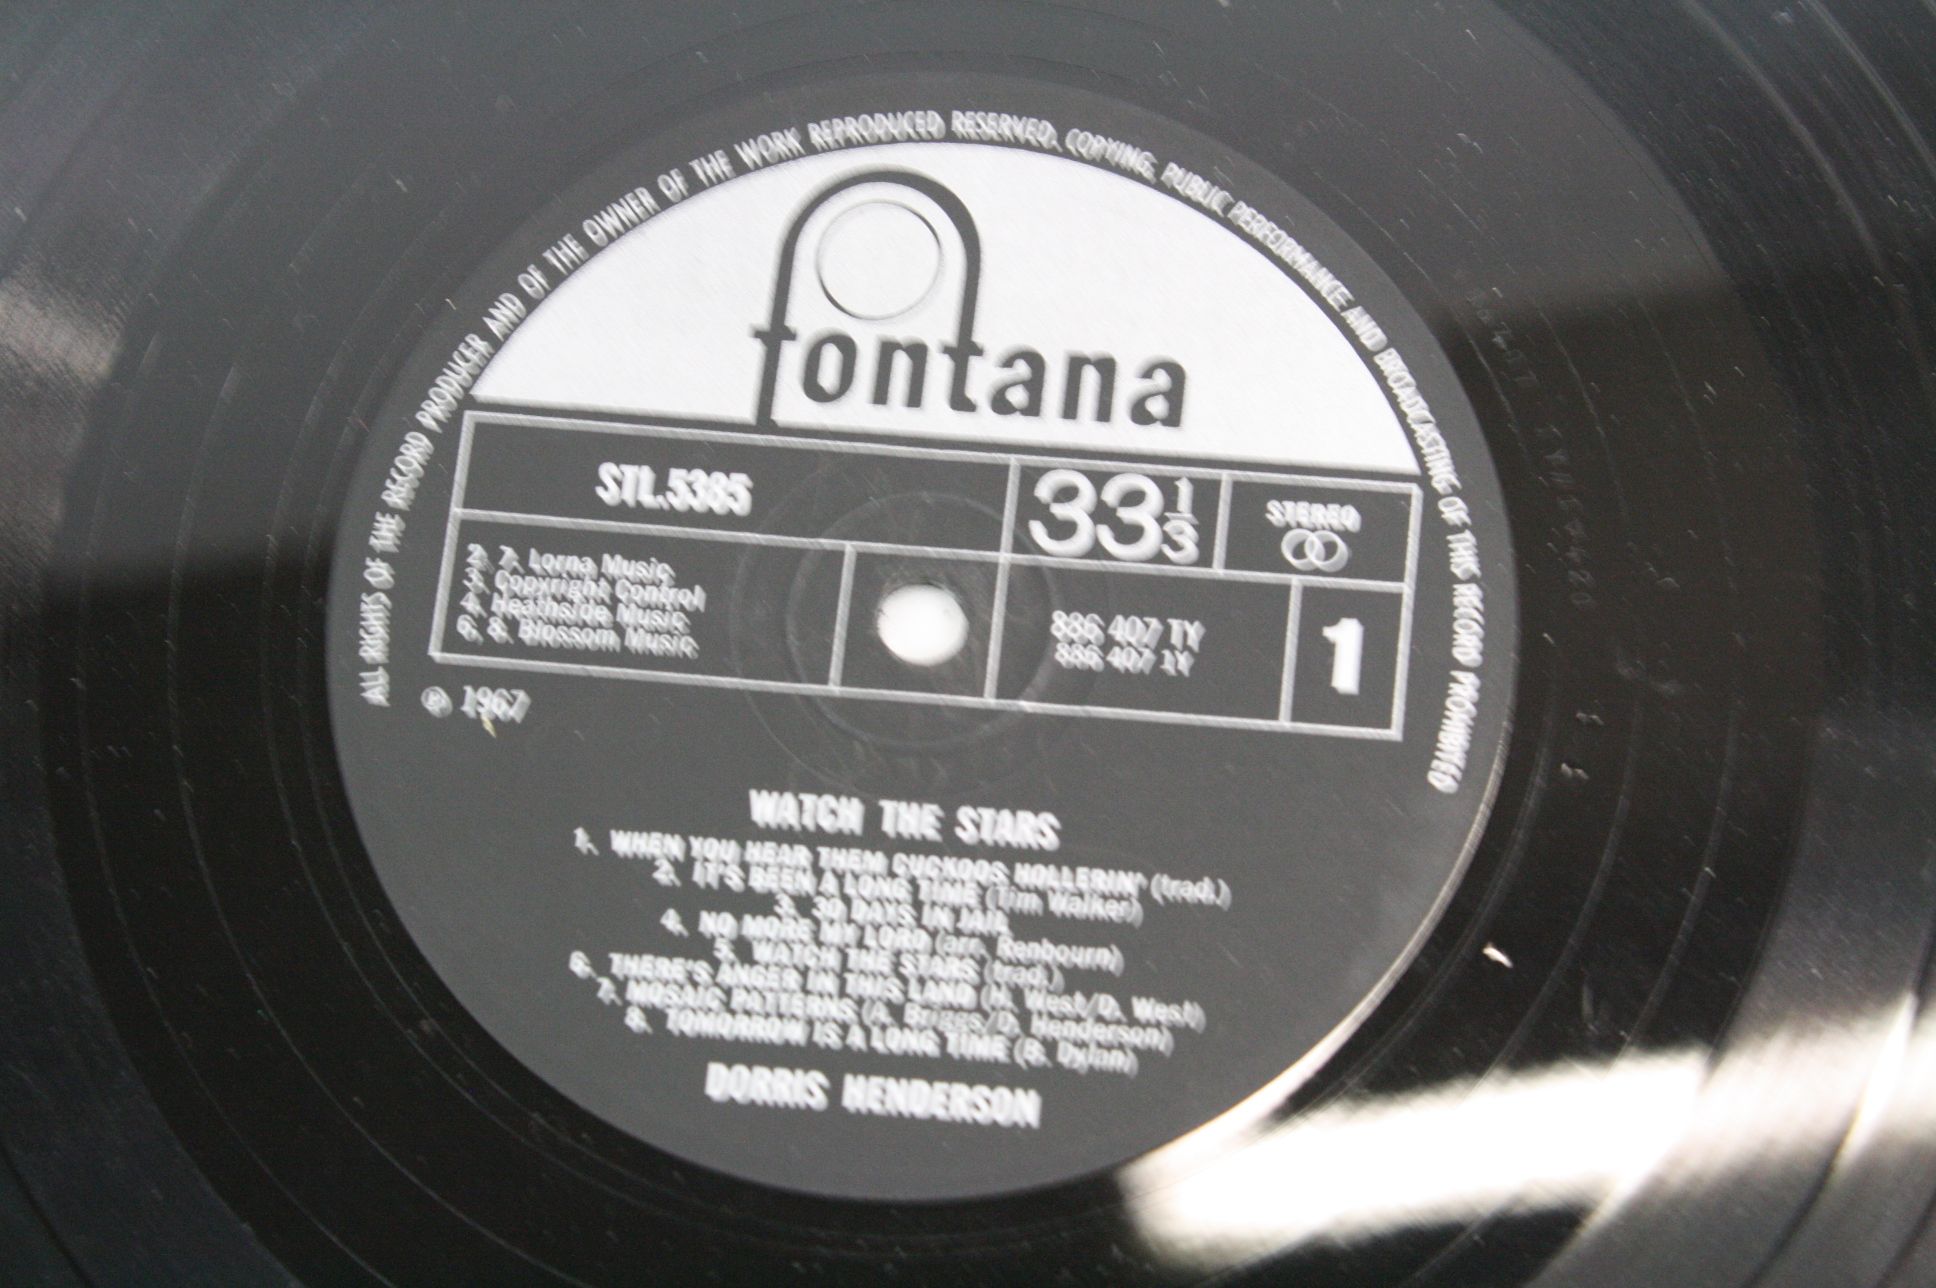 Vinyl - Dorris Henderson Watch The Stars LP on Fontana STL5385 886 407 TY sleeves and vinyl vg+ - Image 4 of 5